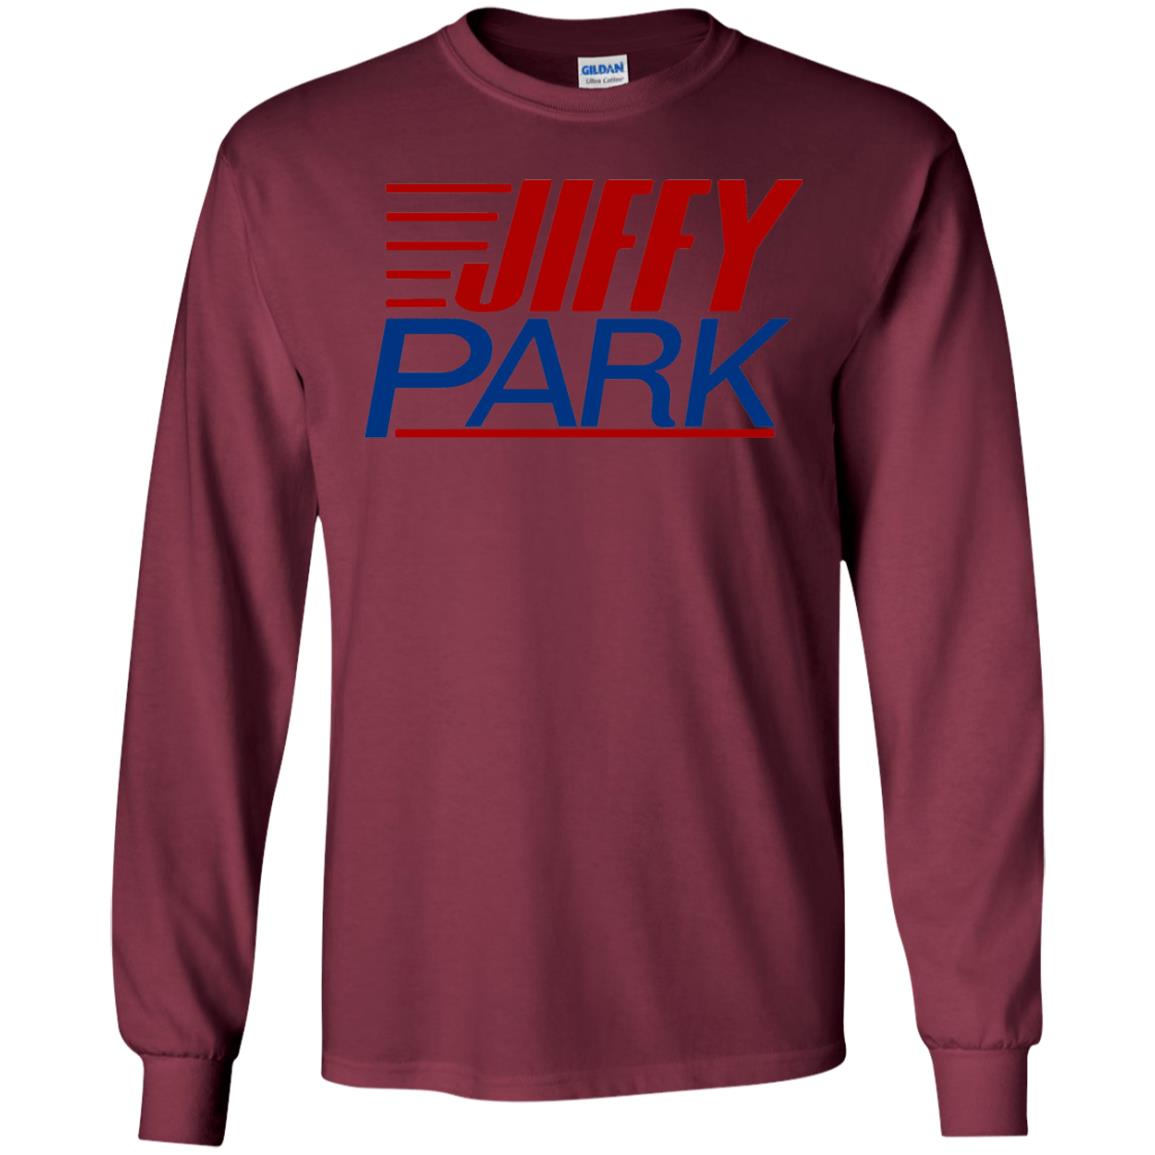 jiffy park long sleeve - maroon